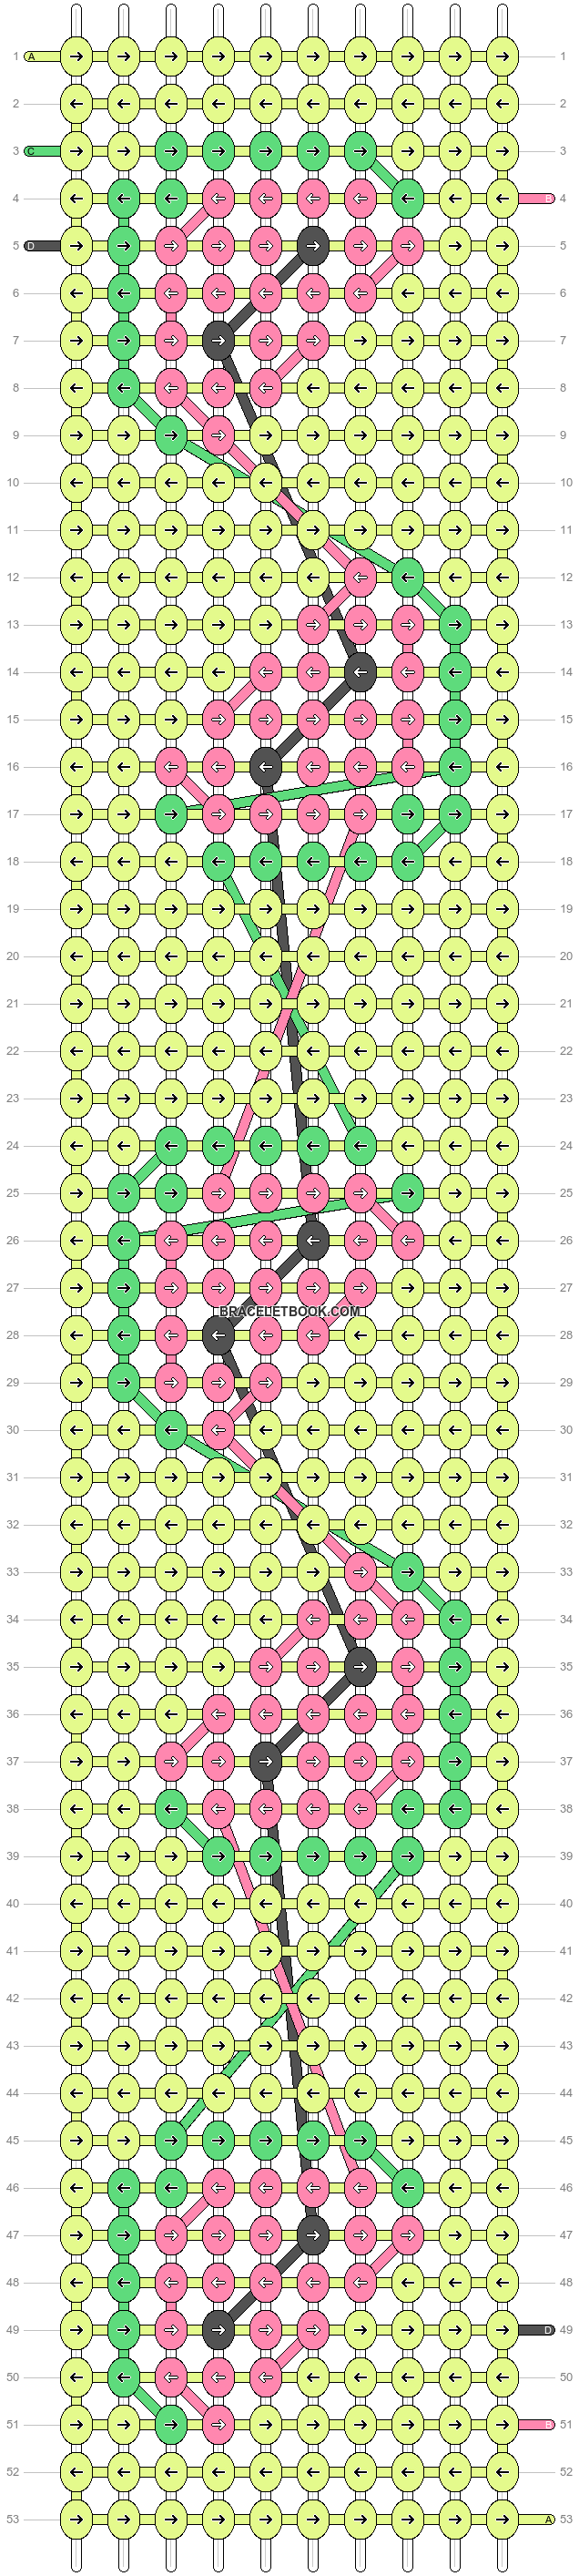 Alpha pattern #31408 variation #38419 pattern